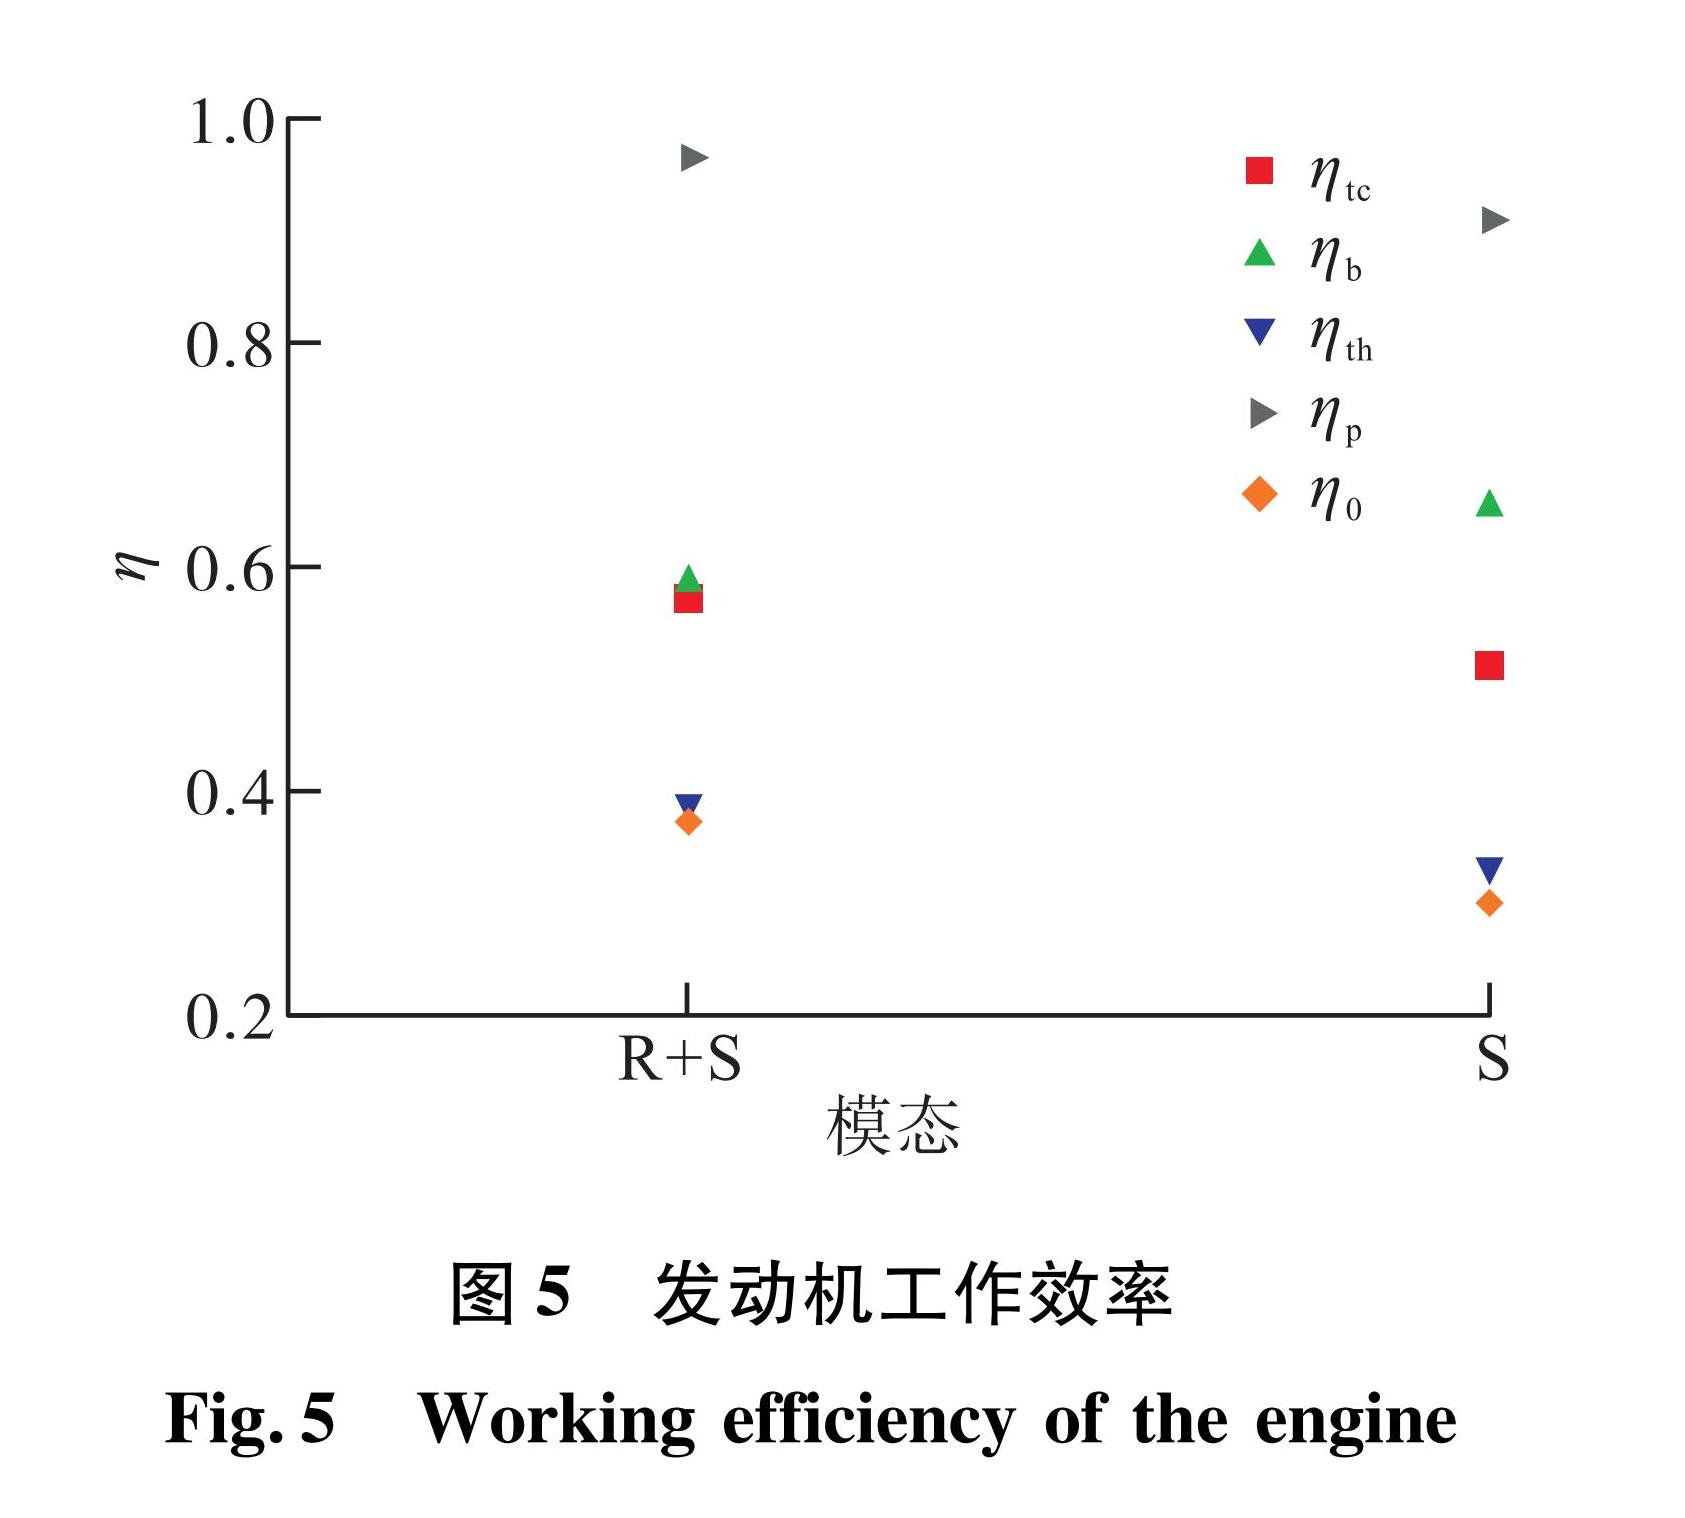 图5 发动机工作效率<br/>Fig.5 Working efficiency of the engine